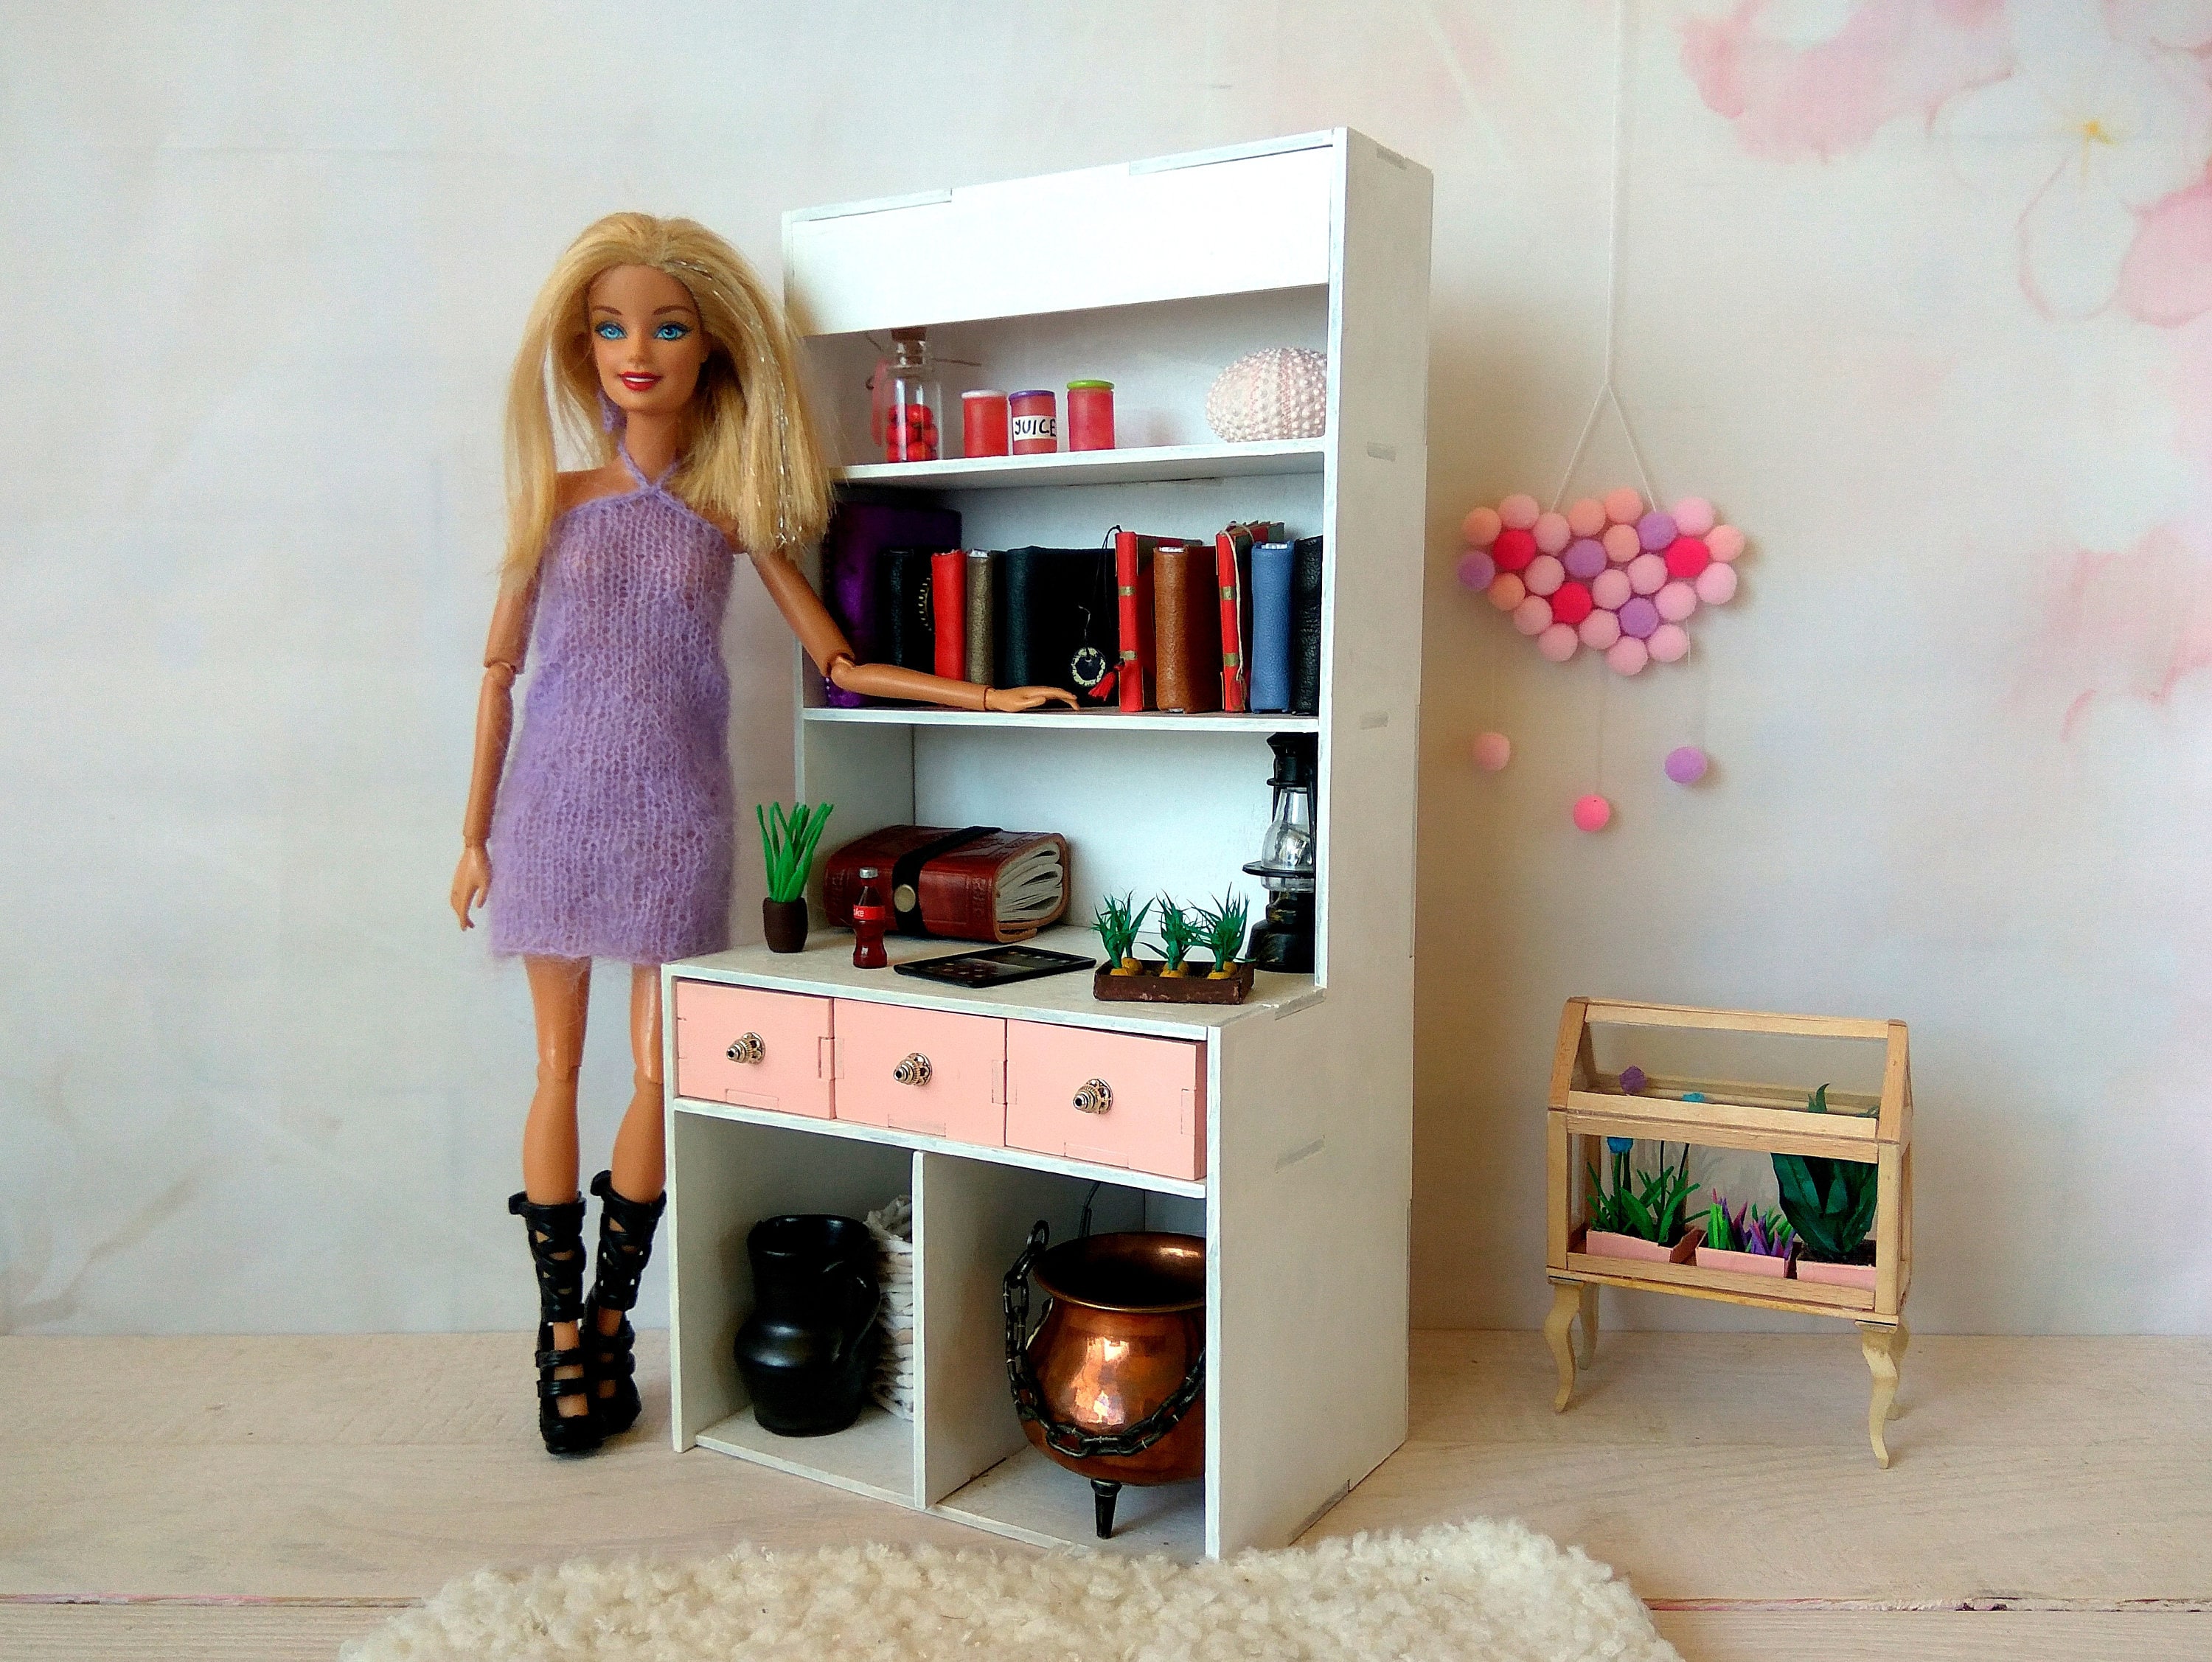 Details about   Collectible Handcraft Miniature Dollhouse 1/6 Kitchen Cabinet Wooden 